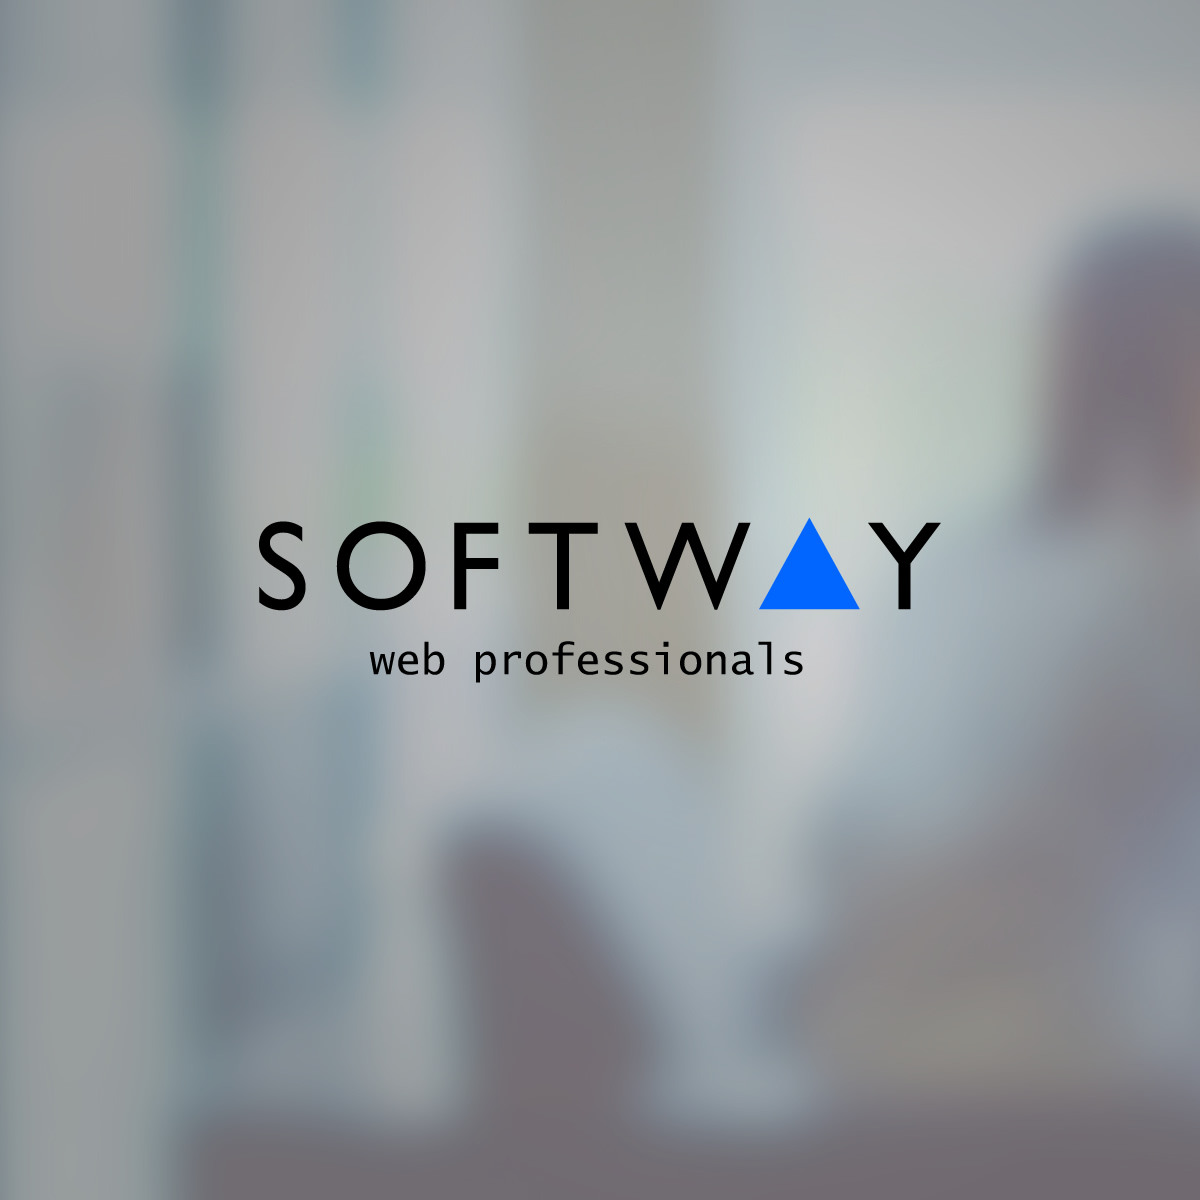 (c) Softway.net